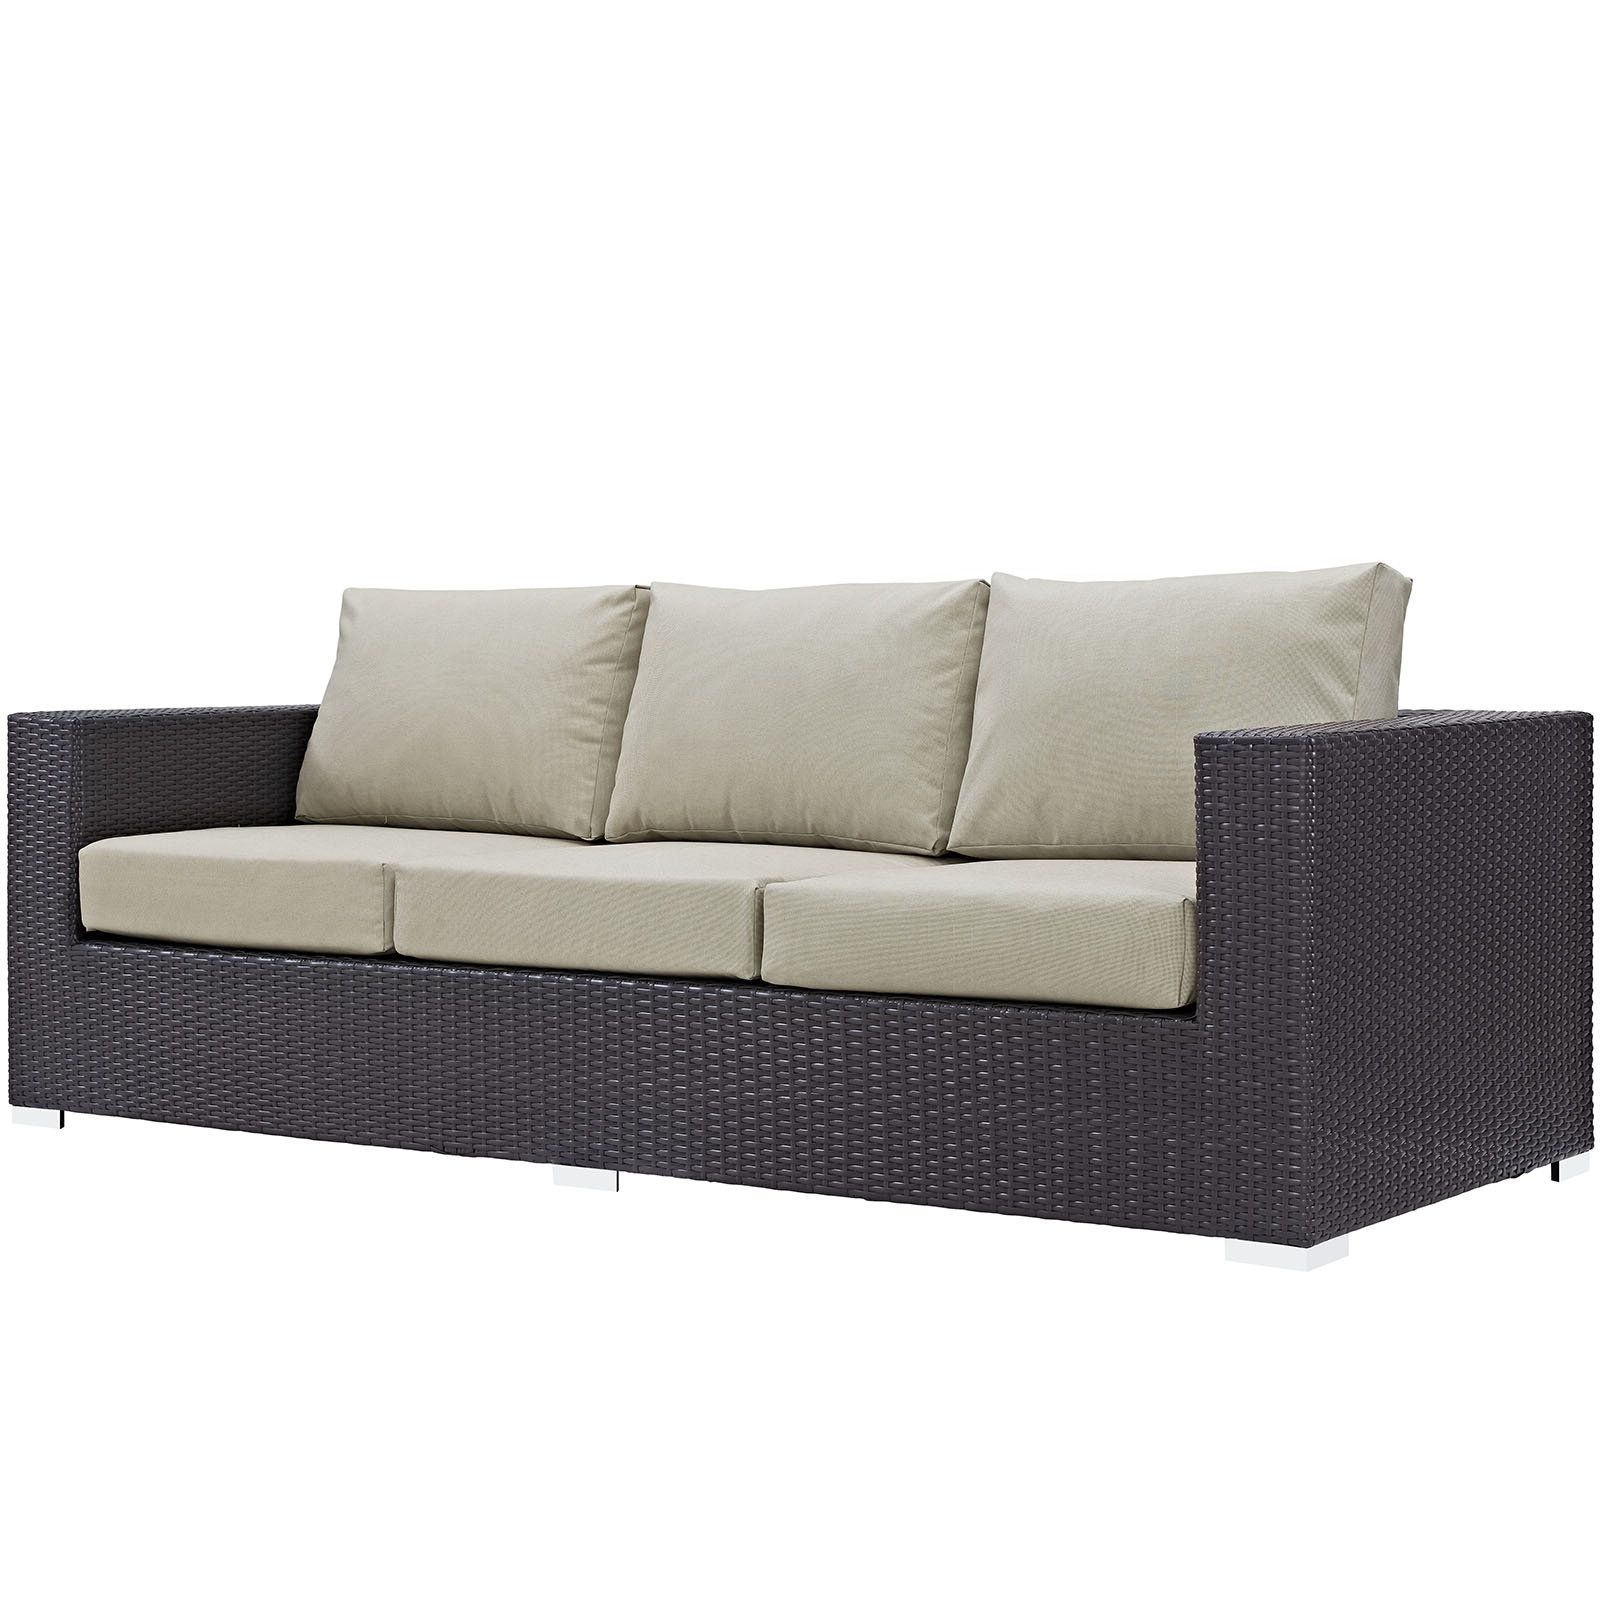 Brentwood Patio Sofa With Cushions Regarding Trendy Belton Patio Sofas With Cushions (View 4 of 25)